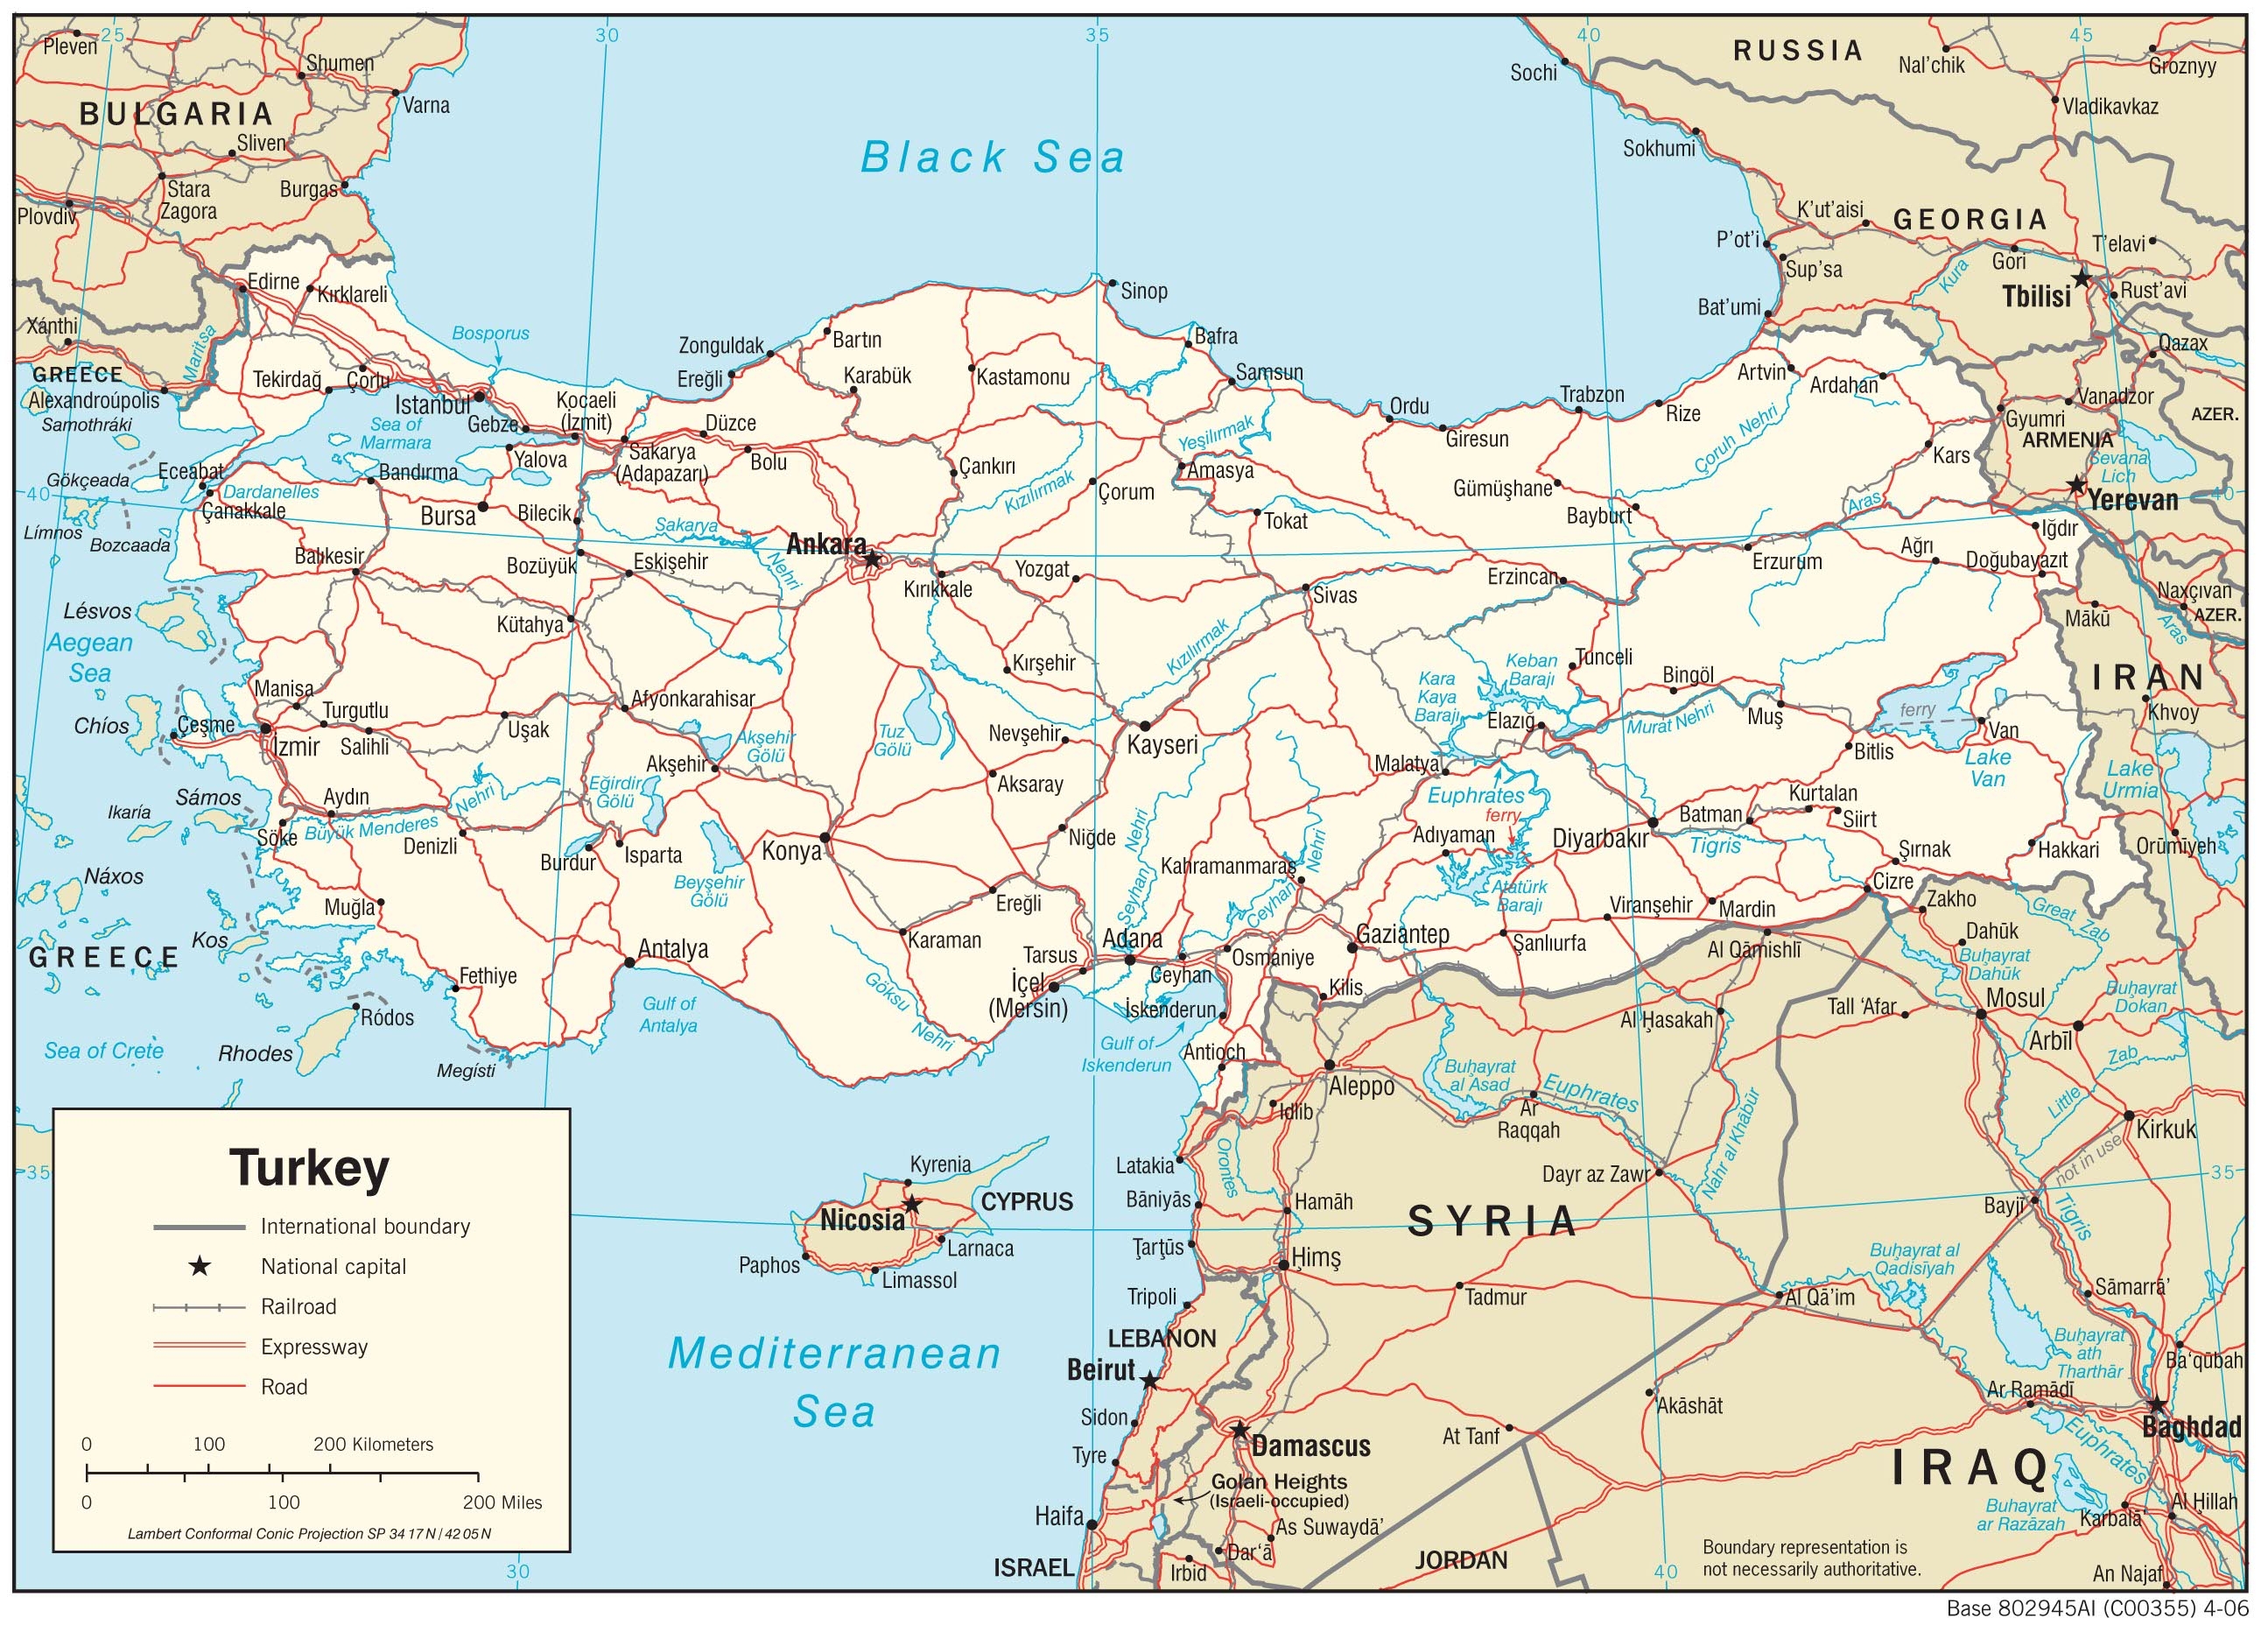 http://www.lib.utexas.edu/maps/middle_east_and_asia/turkey_trans-2006.jpg